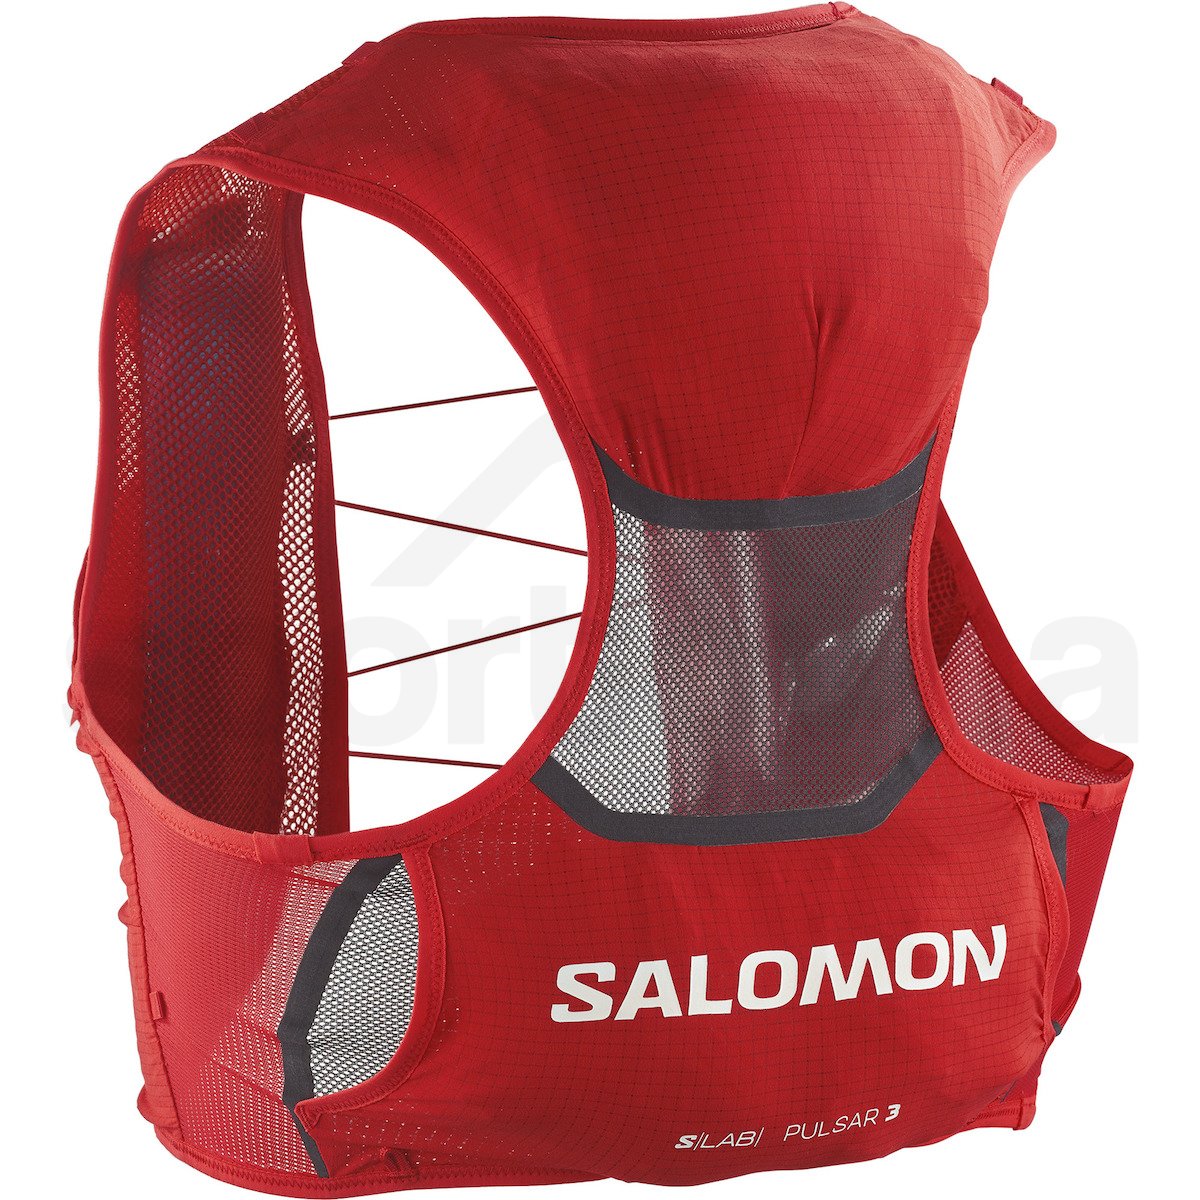 Batoh Salomon S/LAB Pulsar 3 with flasks - červená/černá